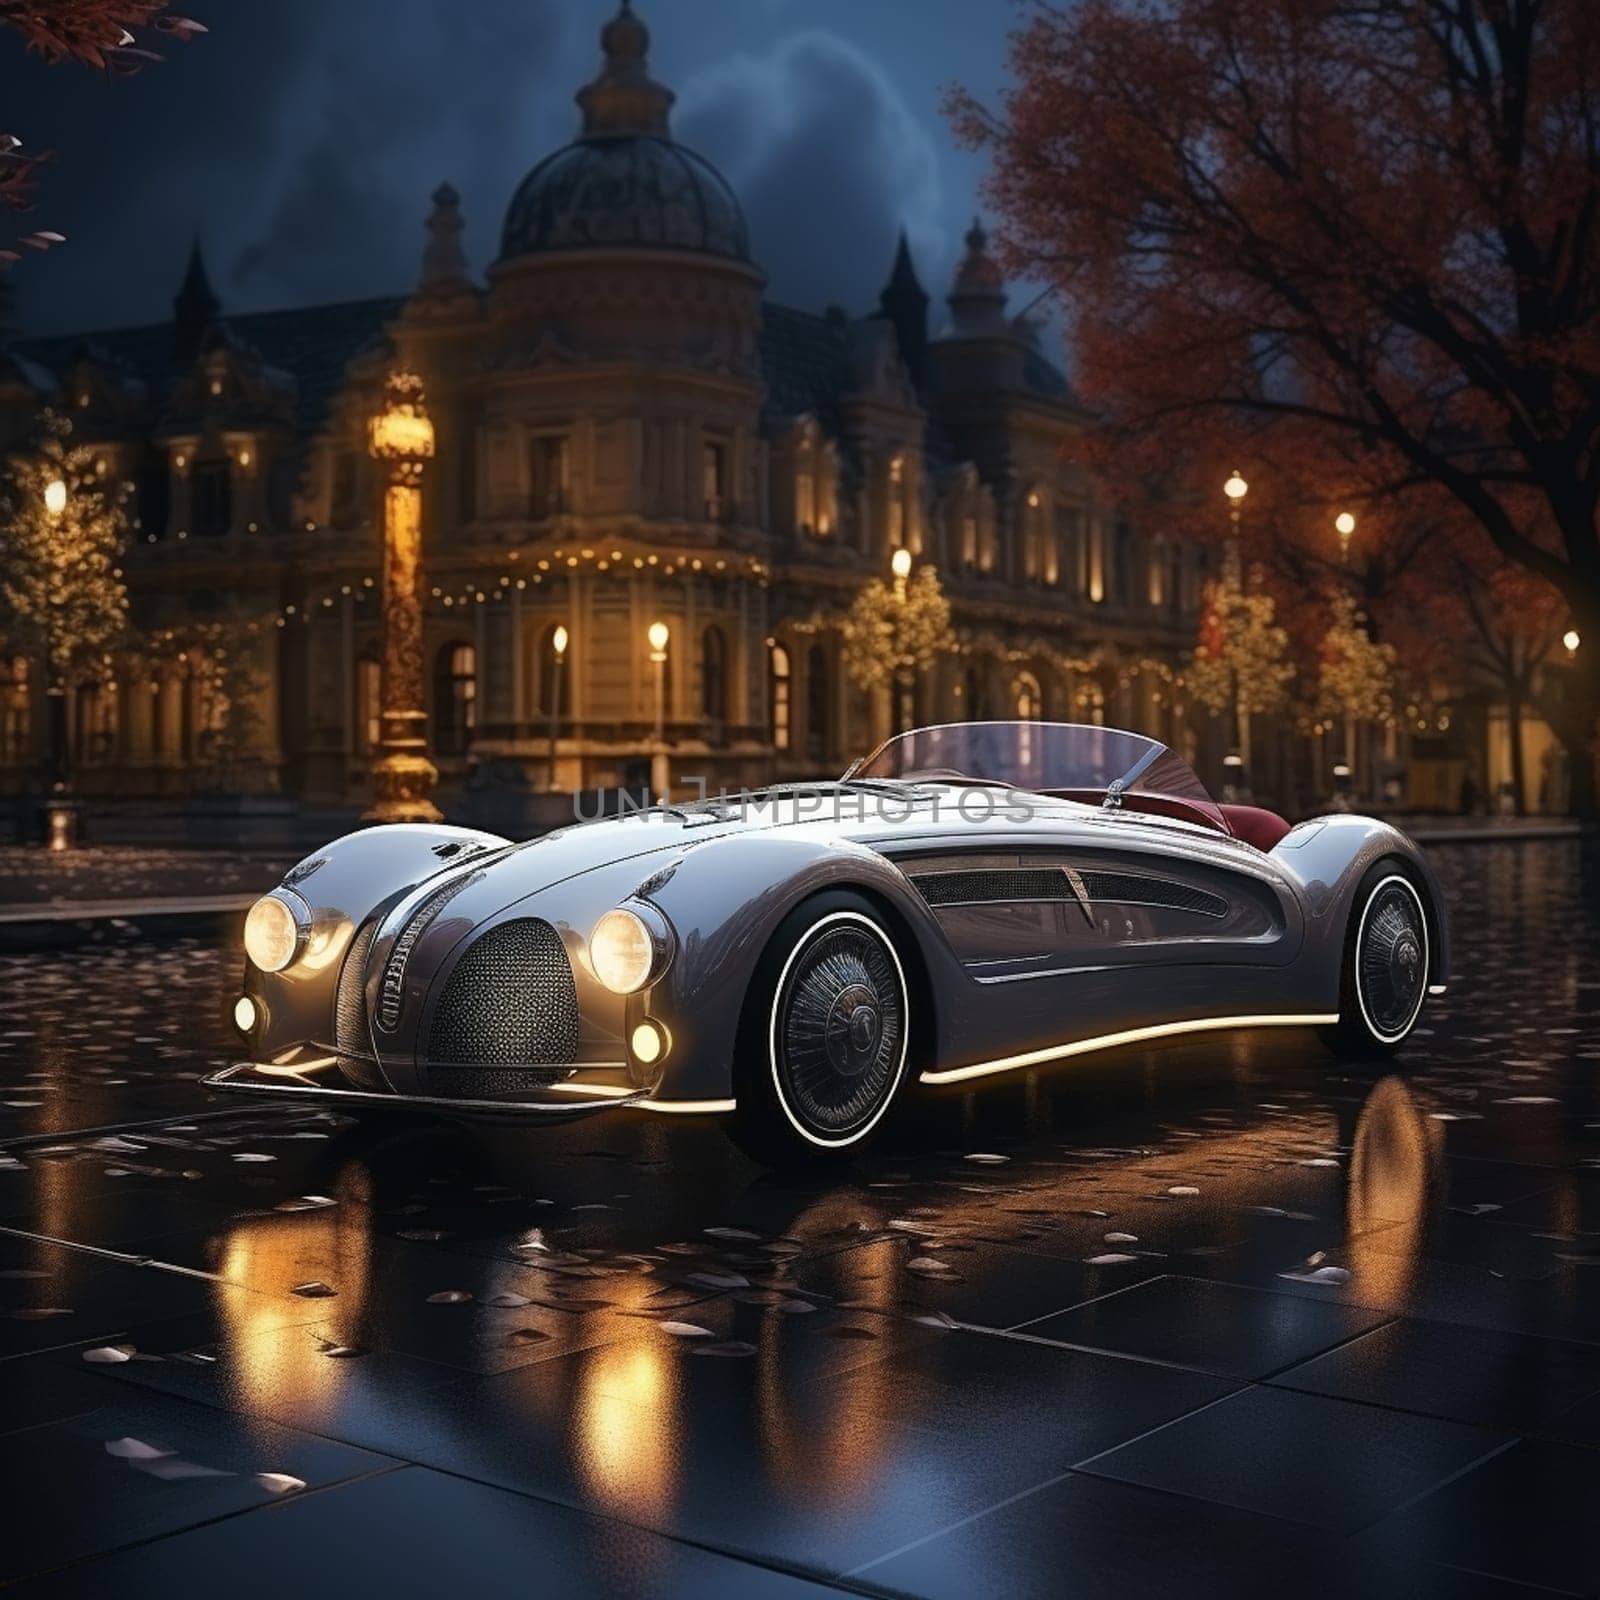 Supercar in cinematic lighting. 3D illustration by Andelov13